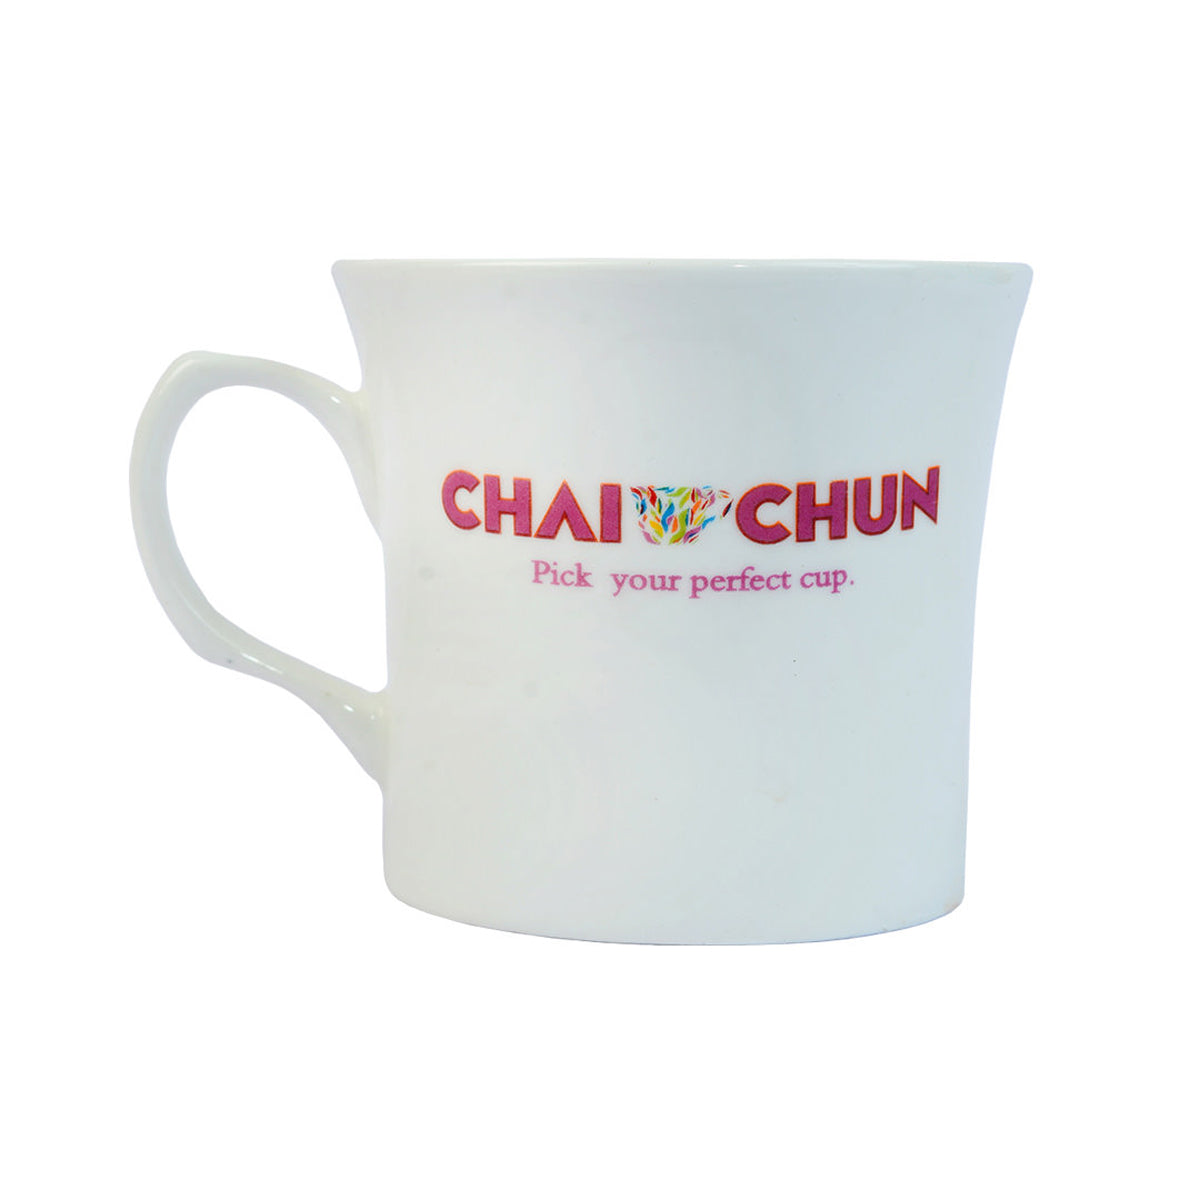 Chai Chun Muddy Mugs